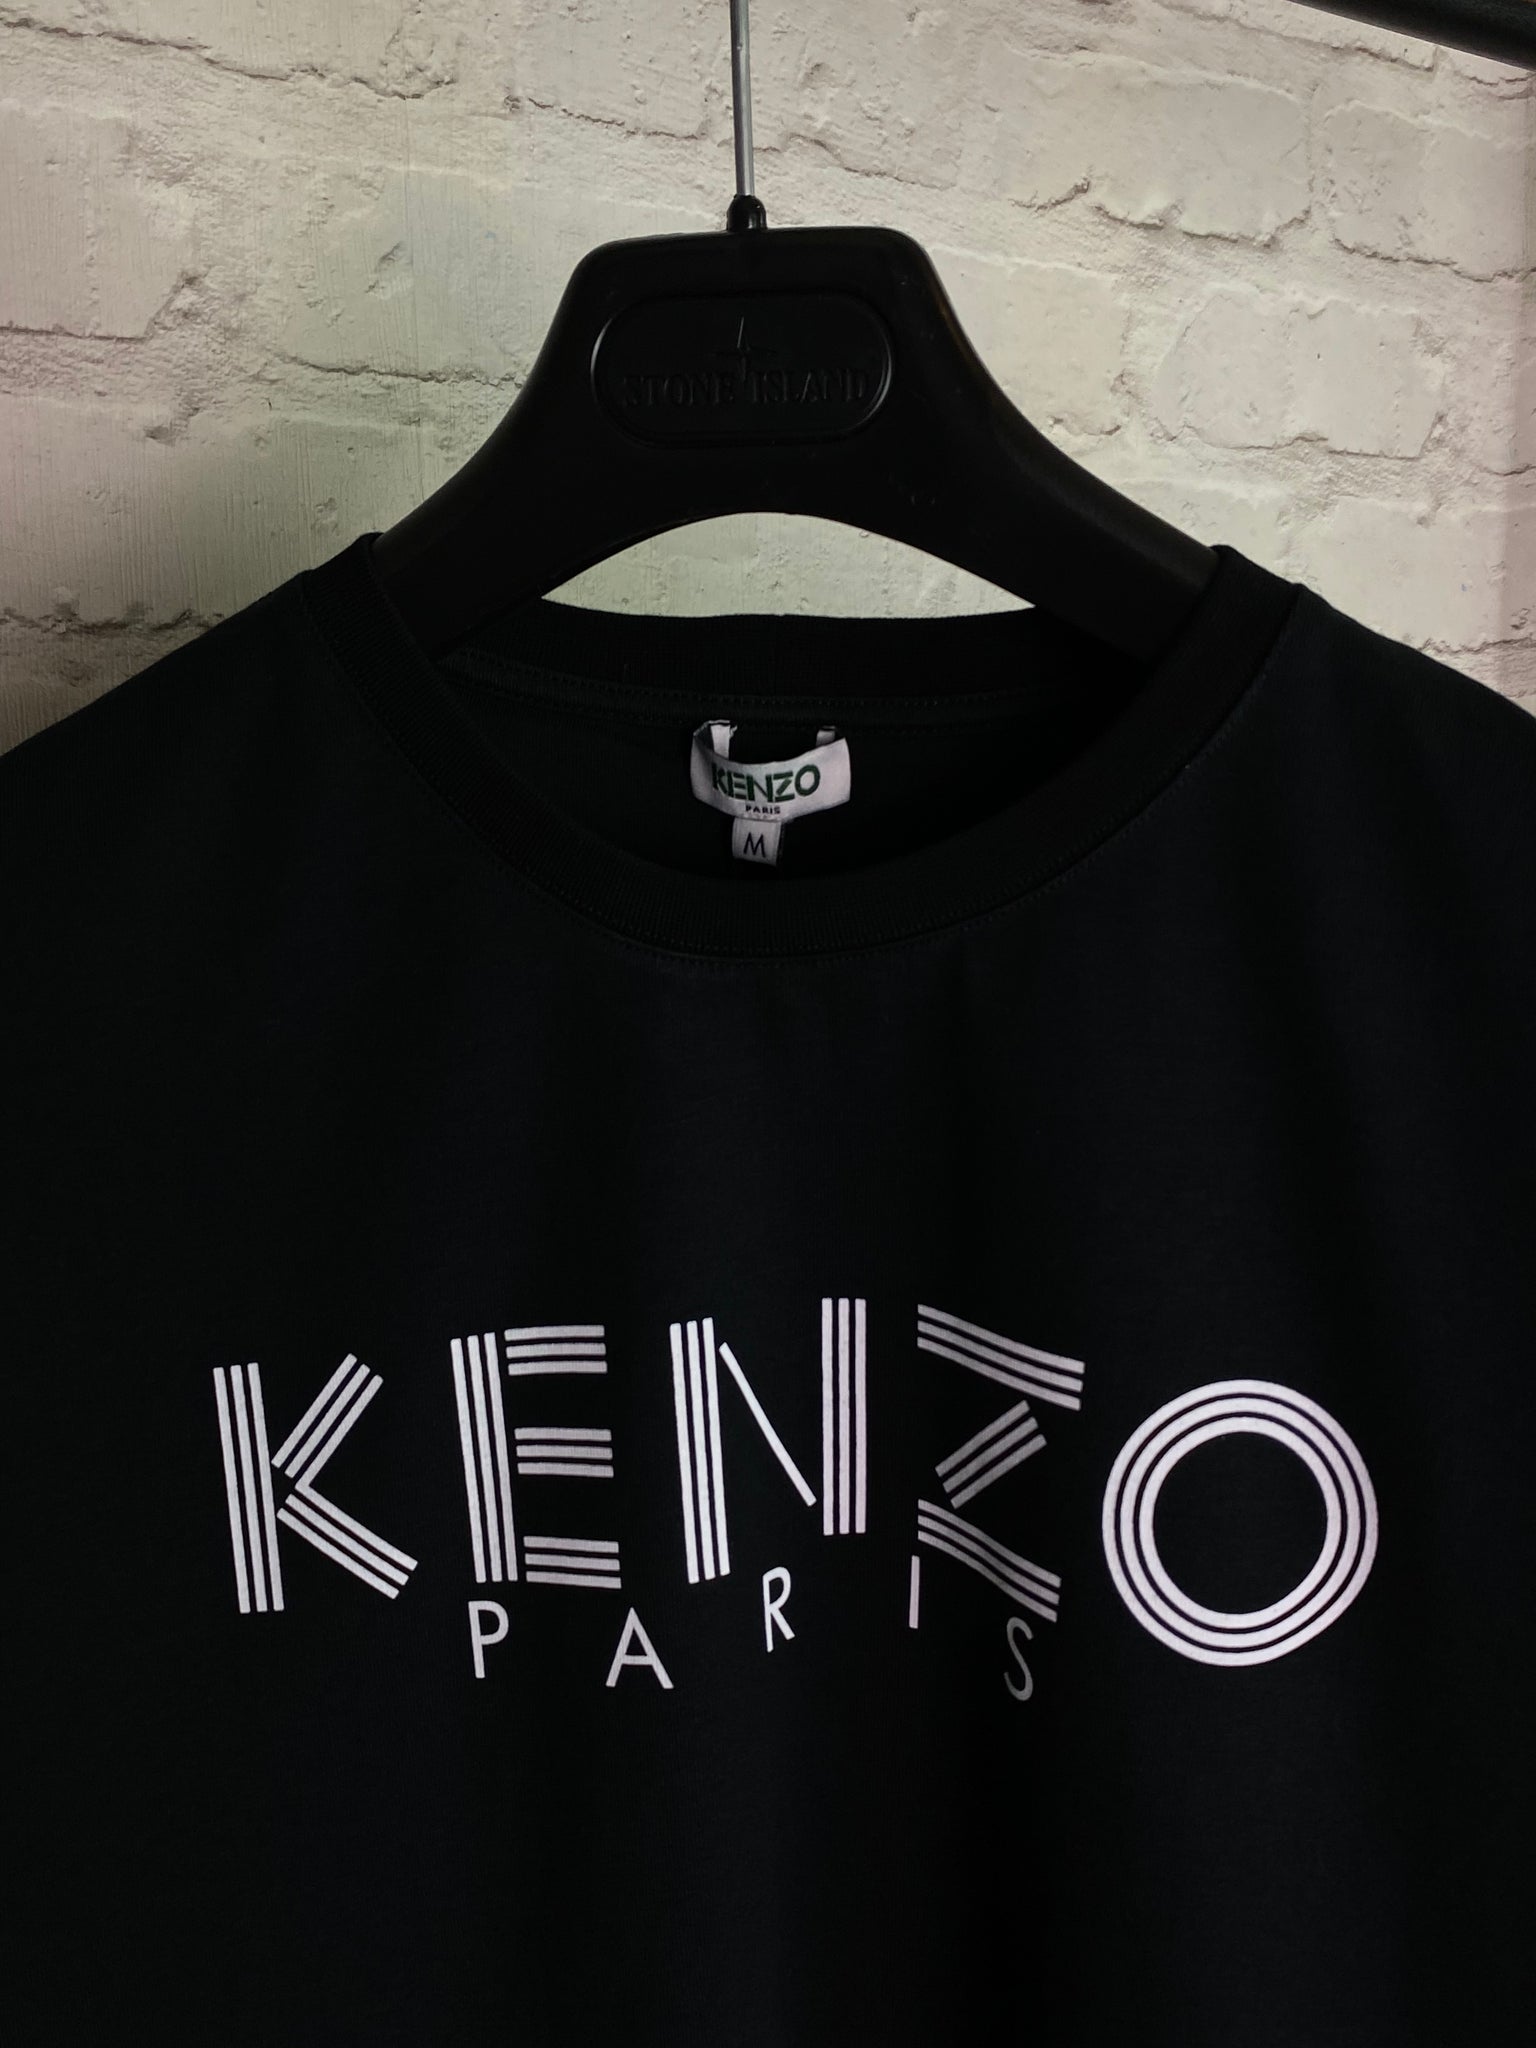 Kenzo Paris logo T-shirt